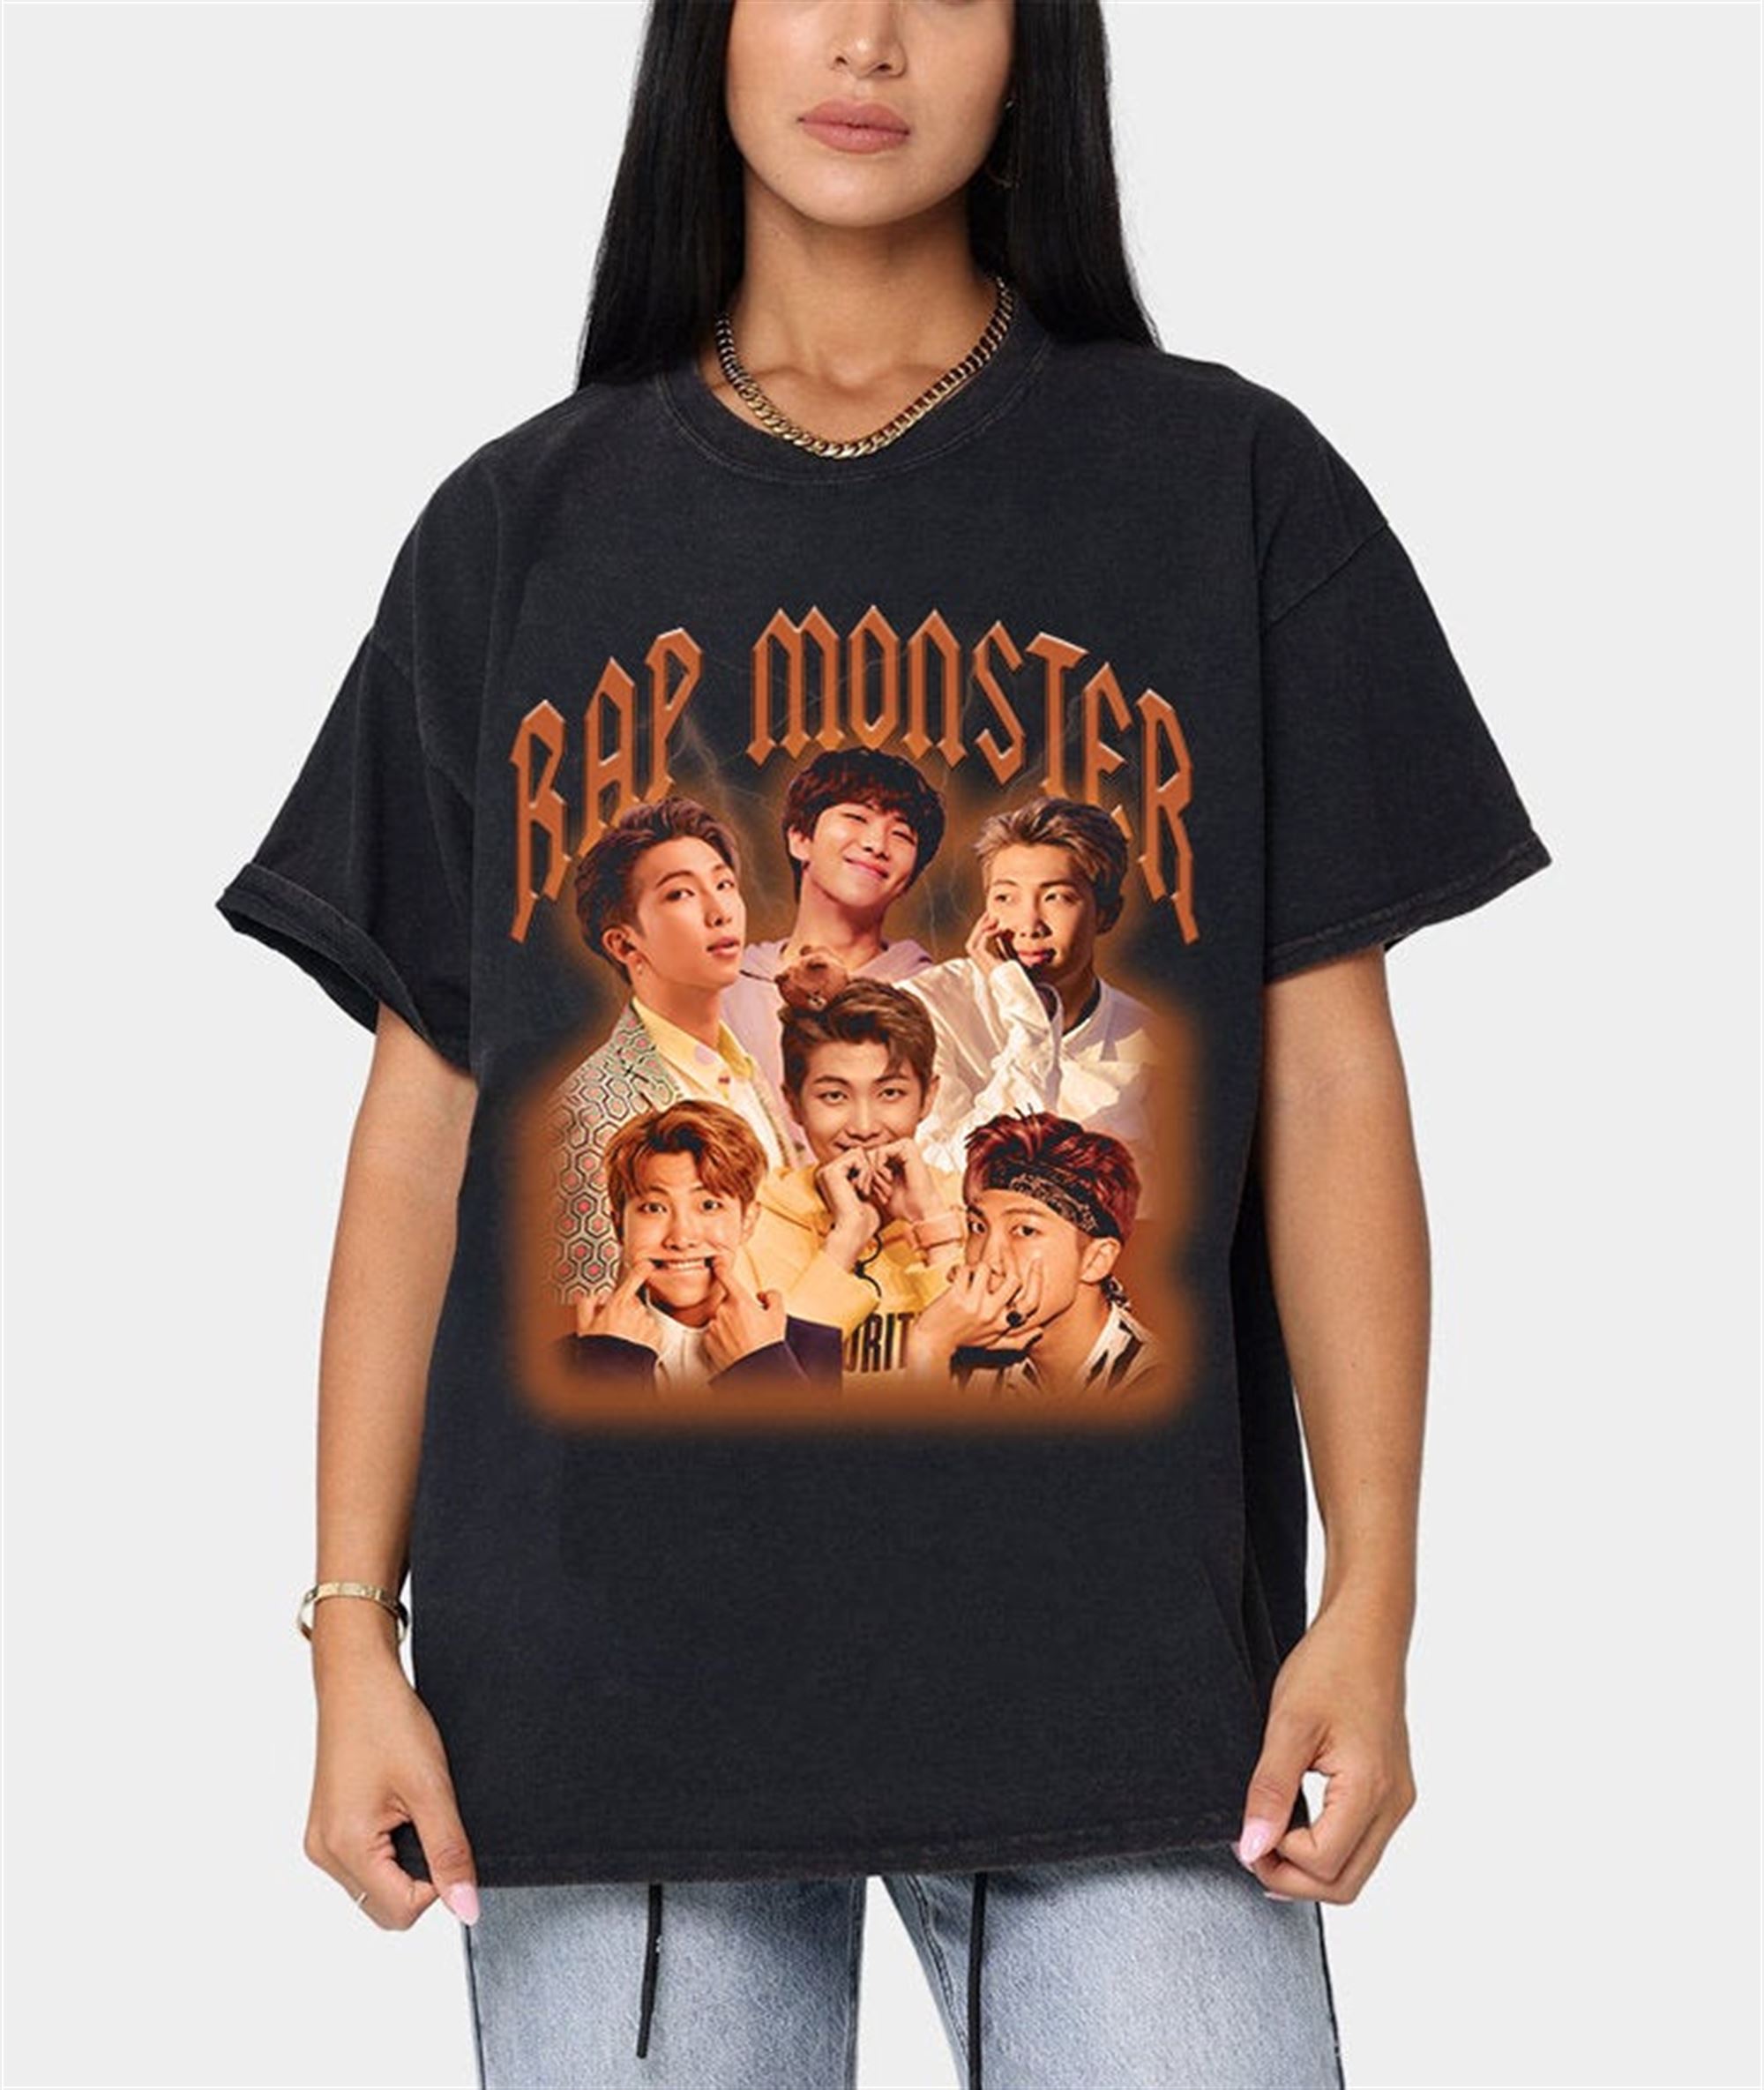 Rap Monster Bts Shirt Bangtan Boys Group Members Shirt Unisex Graphic Tee Kpop T Shirt Vintage Retro Shirt Bts Shirt Fan Gift H